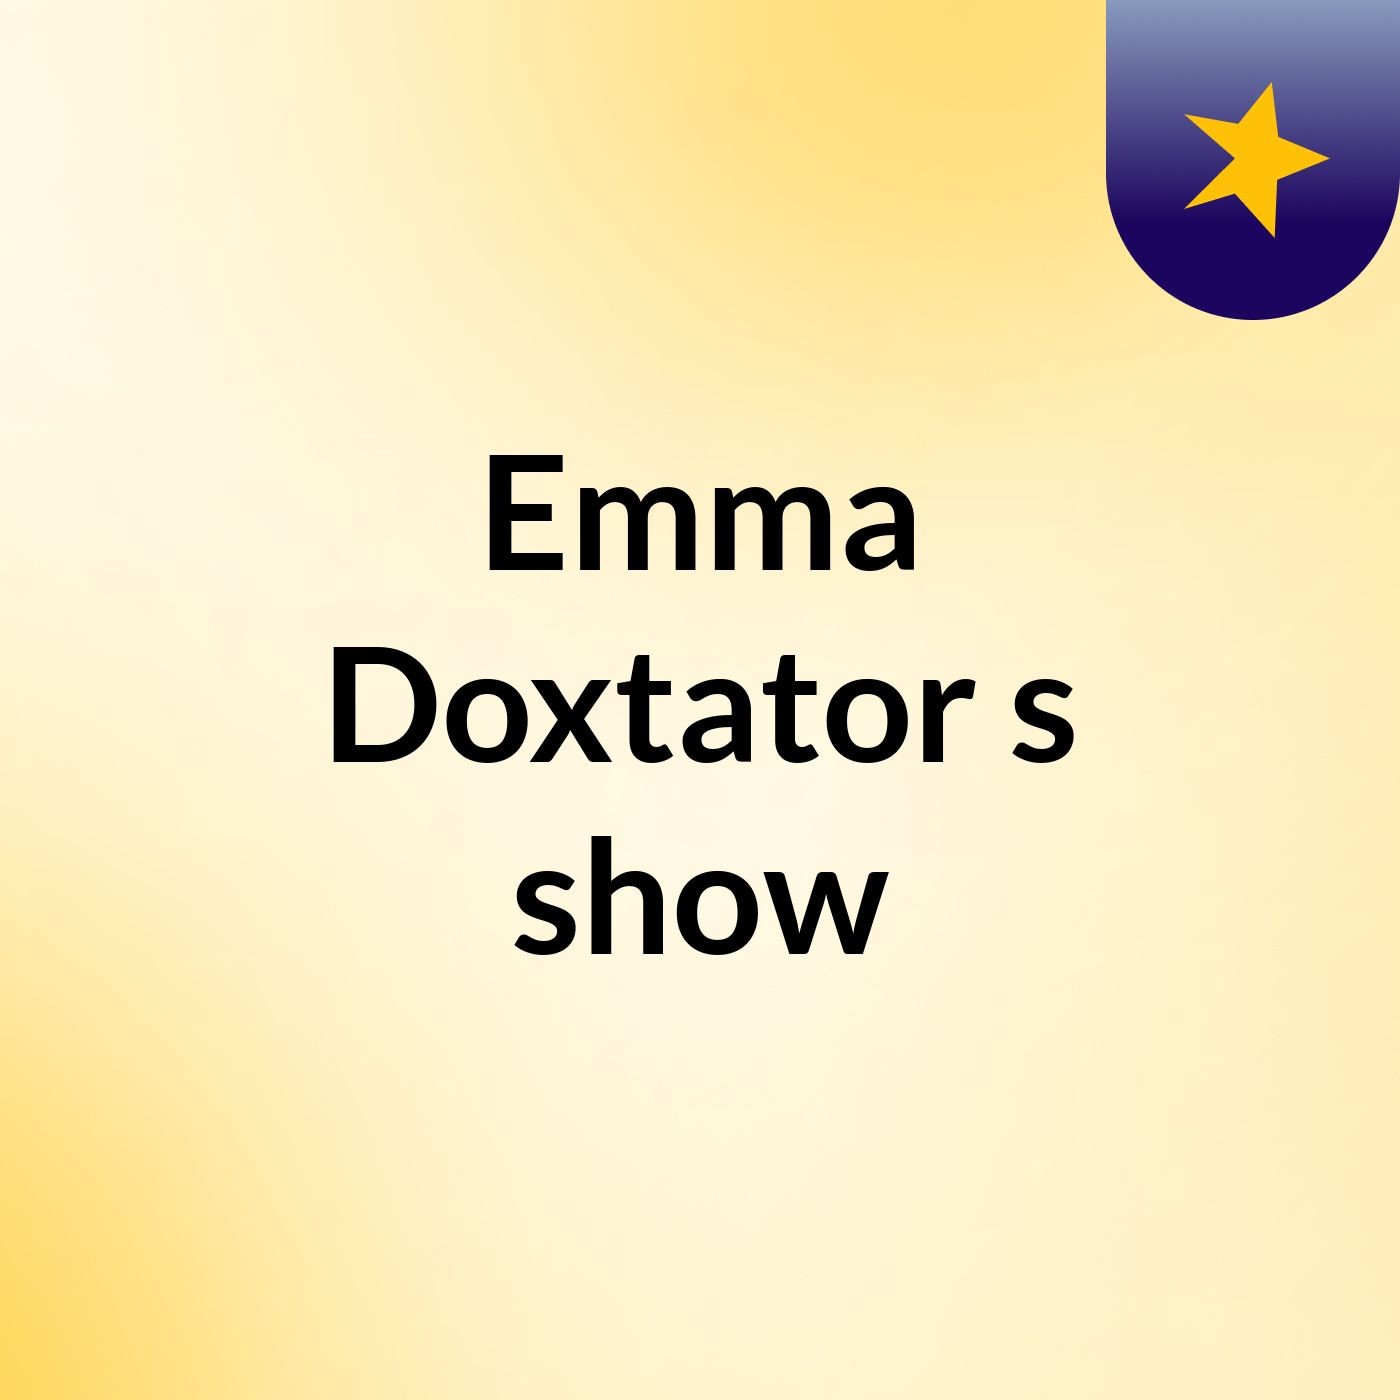 Emma Doxtator's show